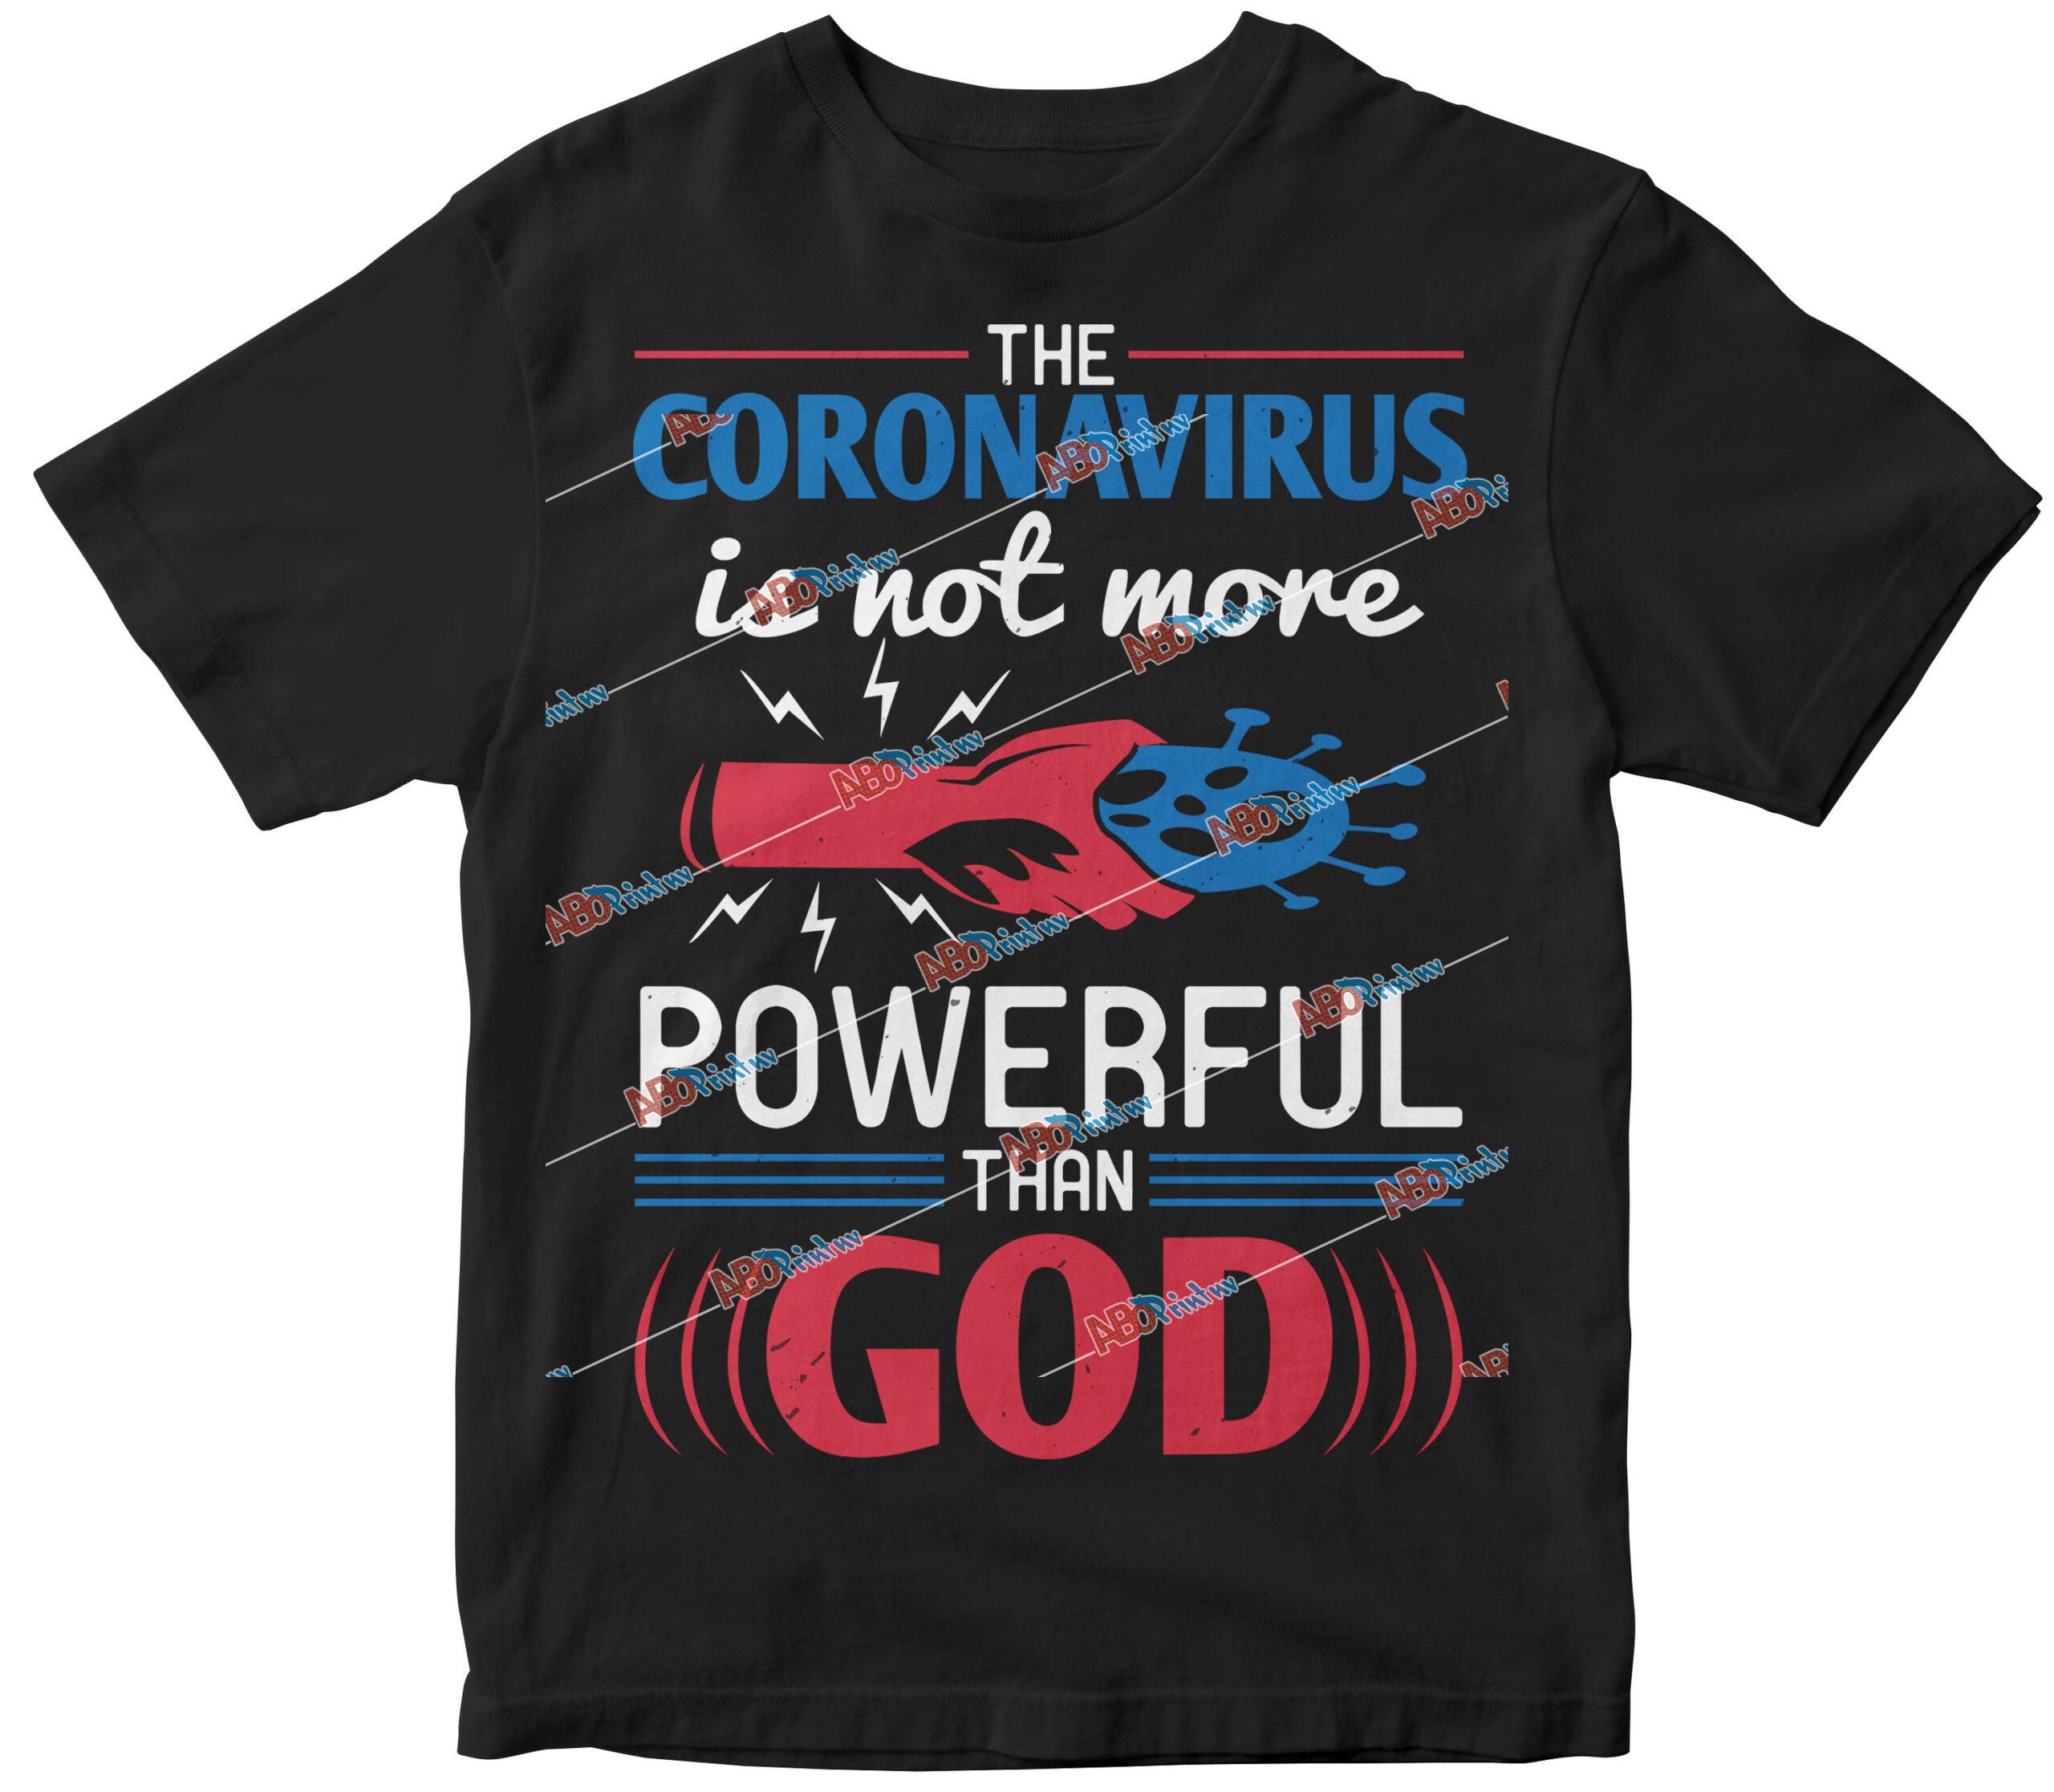 The coronavirus is not more powerful than God.jpg